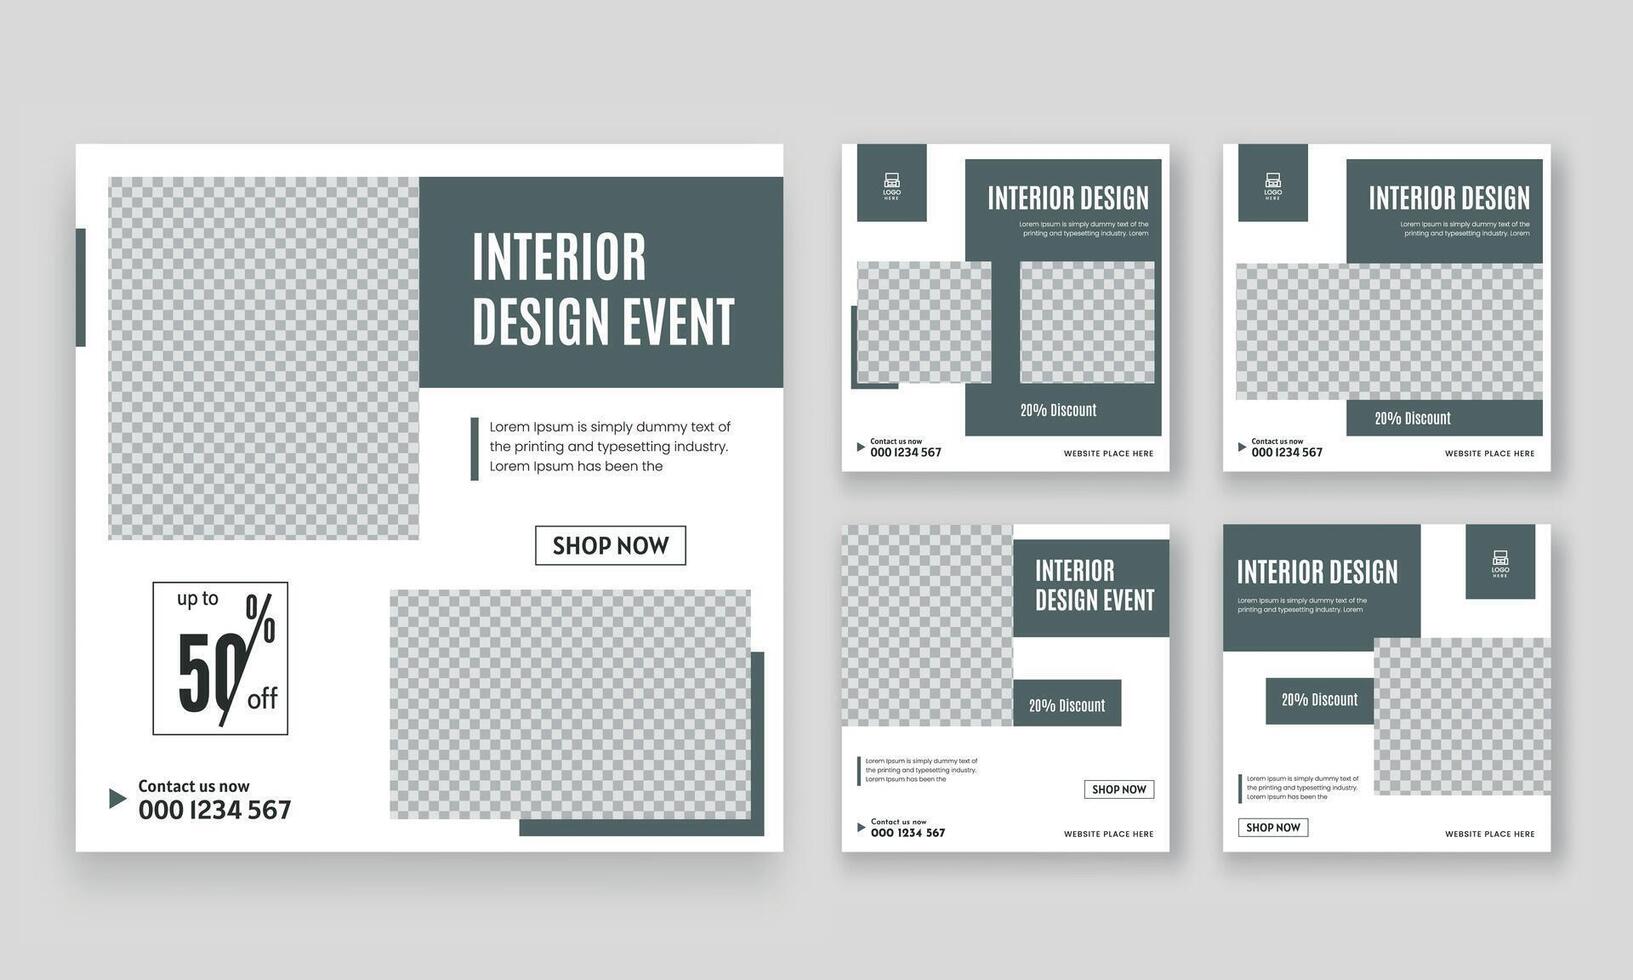 Interior Design Social Media Post and social media template vector